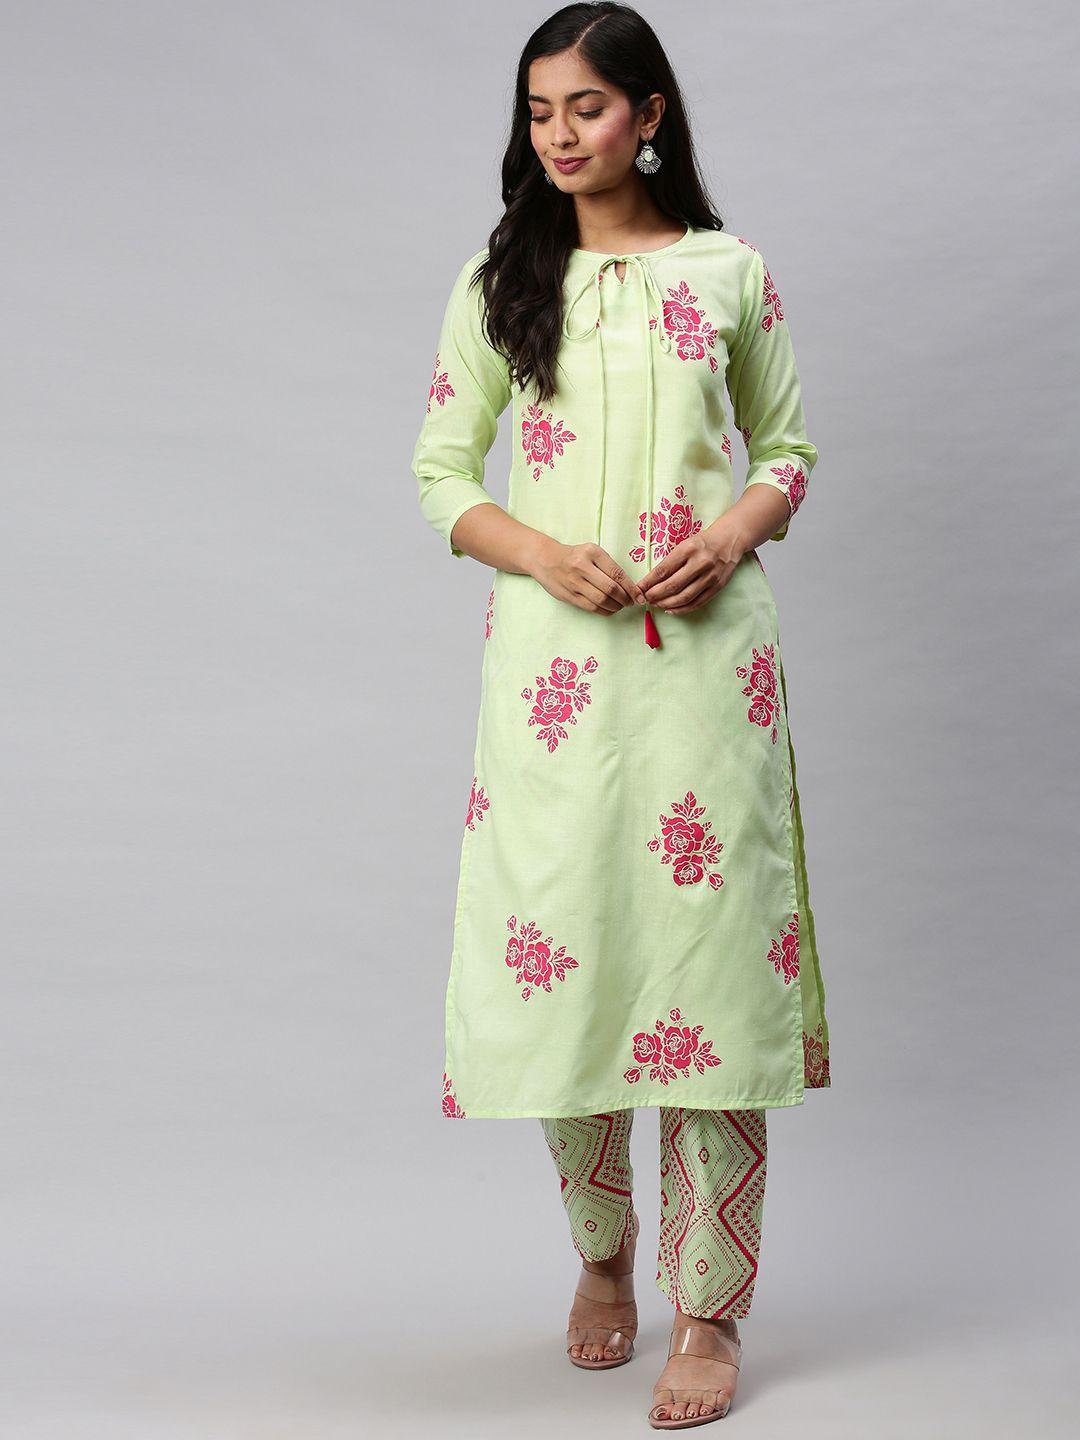 gosriki women green & pink floral printed kurta with trousers